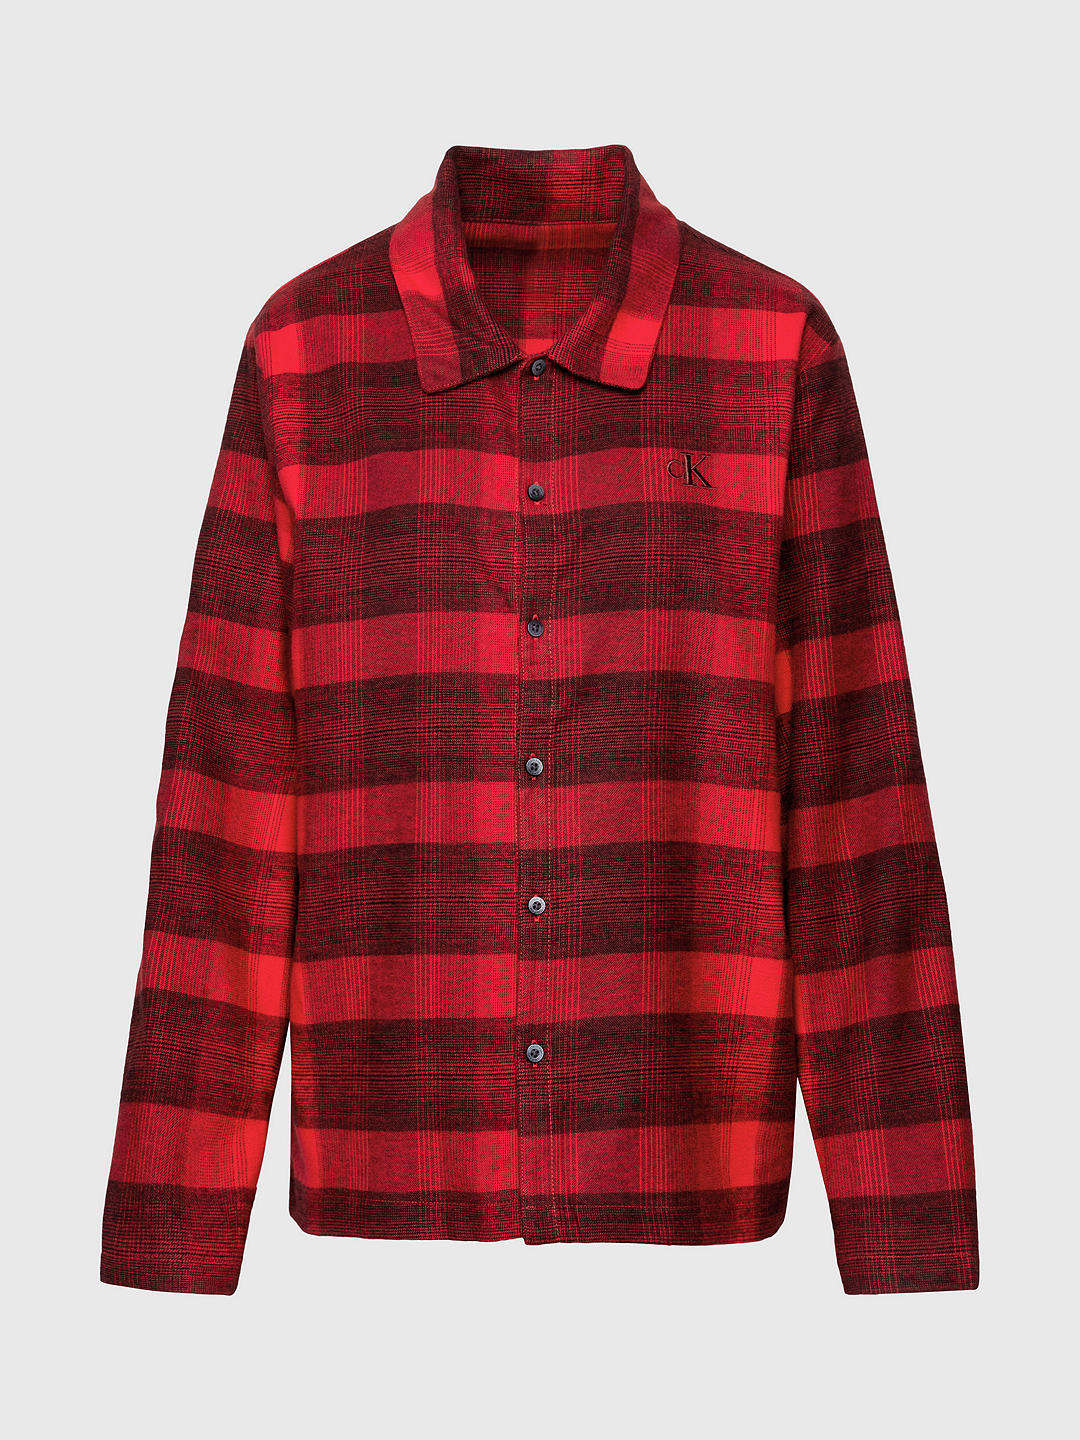 Calvin Klein Check Flannel Pyjama Top, Red/Black